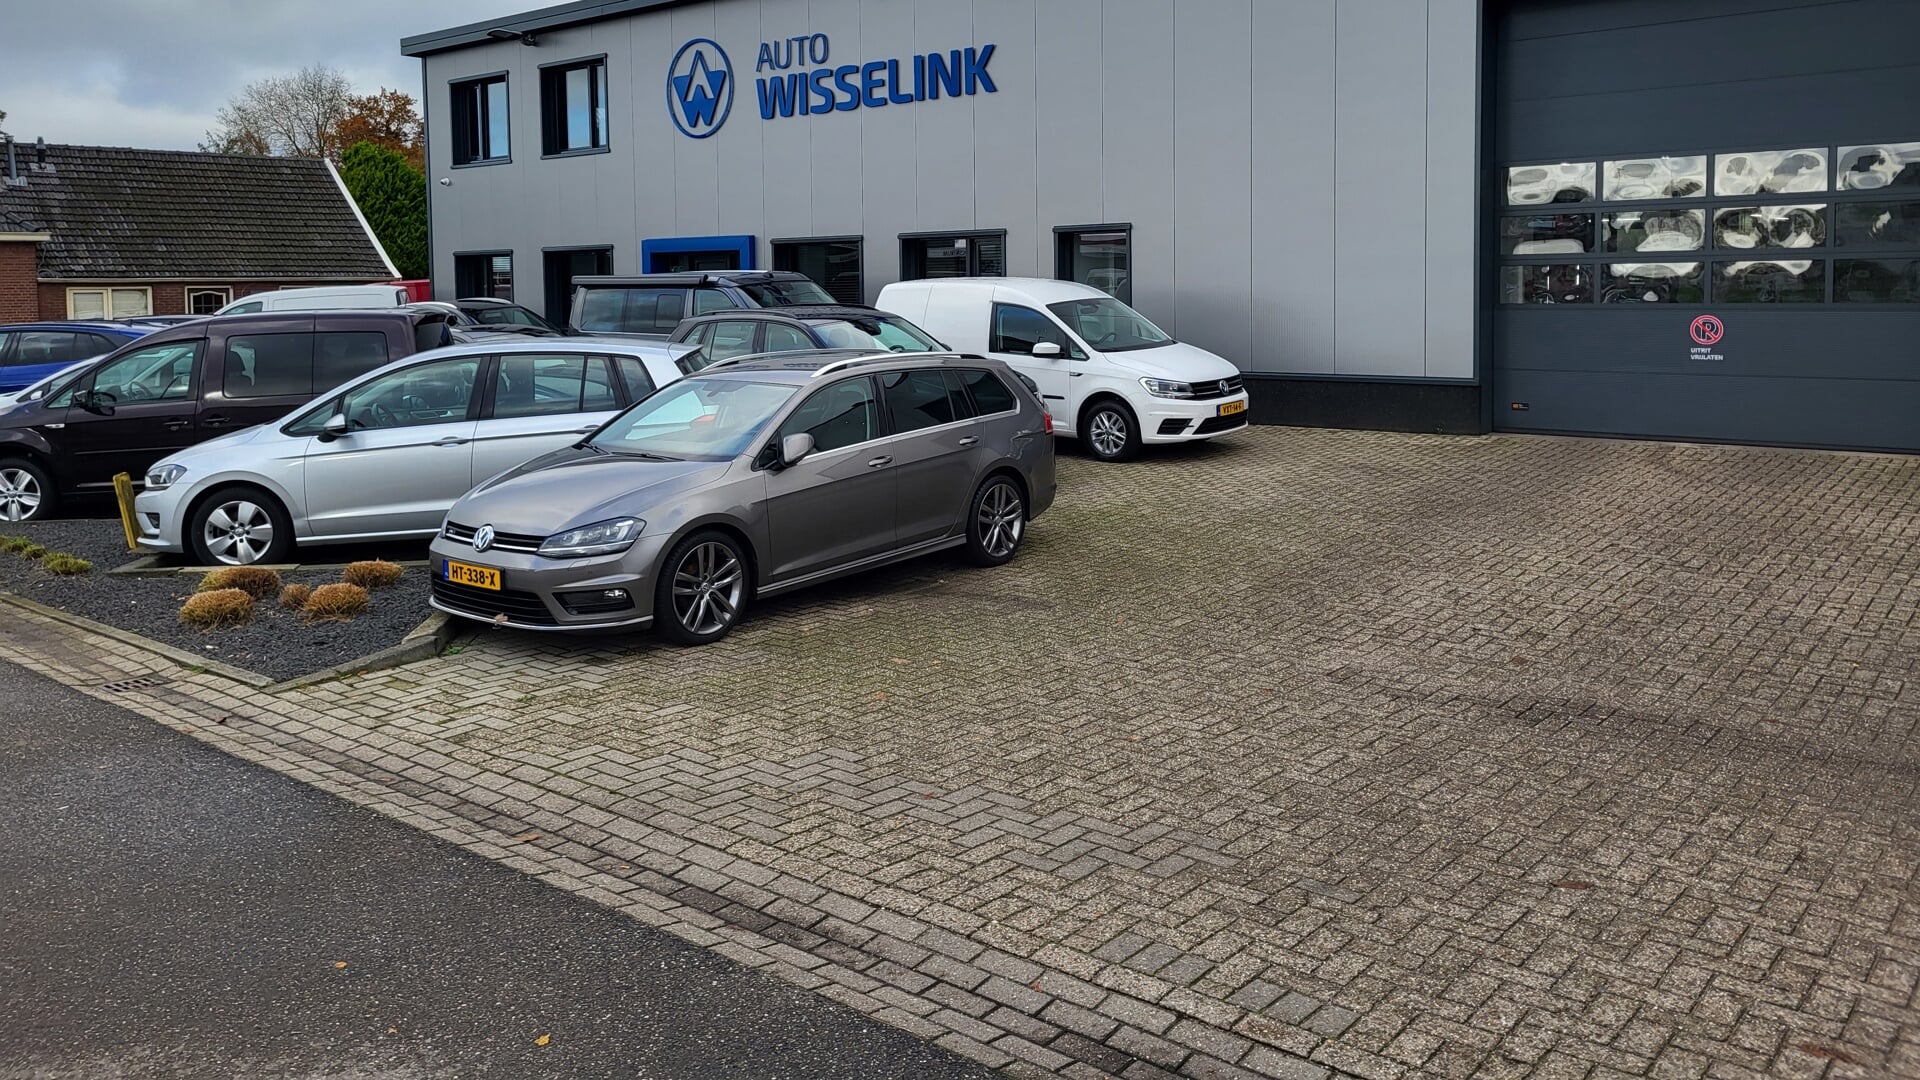 Auto Wisselink in Aalten. Foto: Mark Ebbers